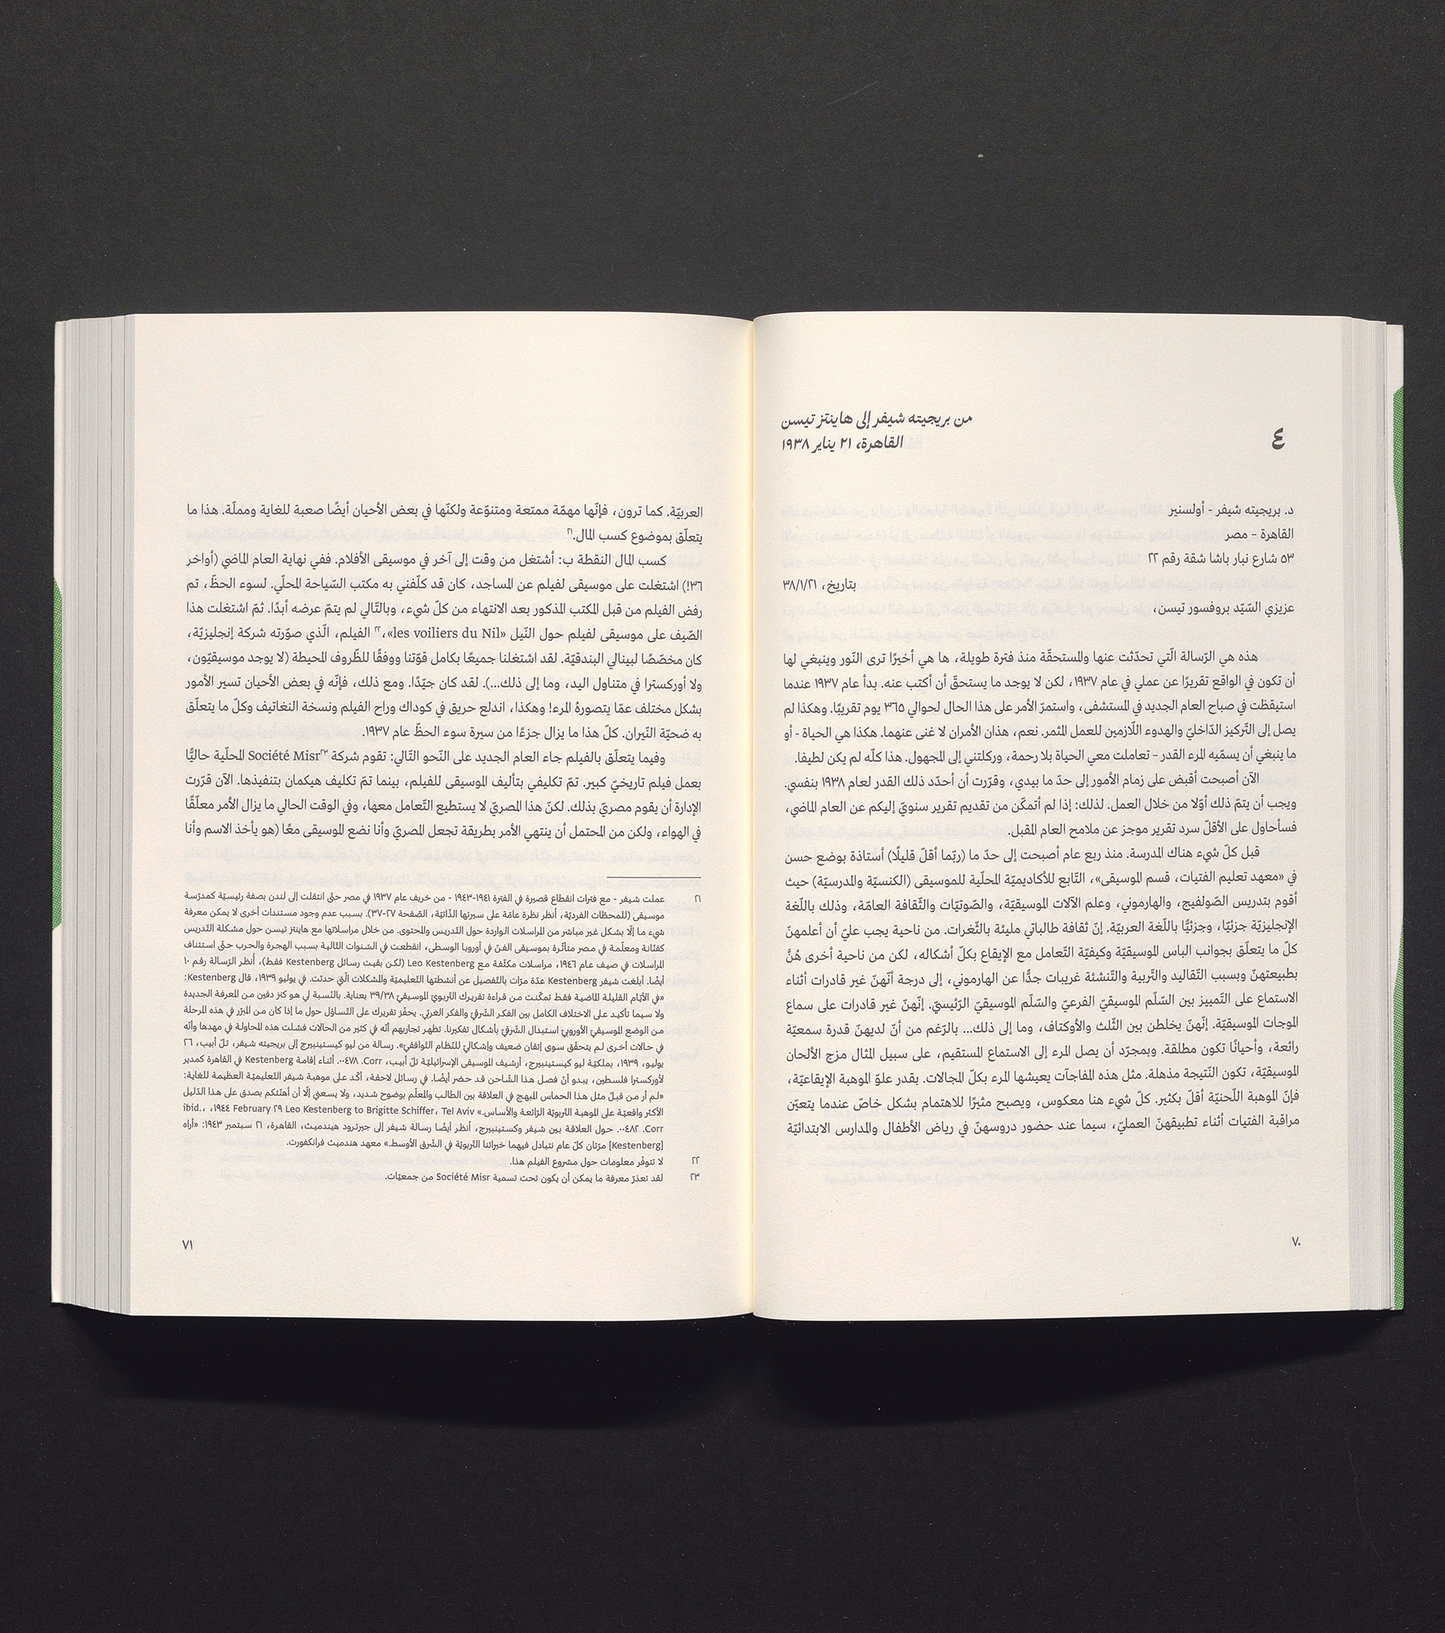 Brigitte Schiffer: Letters from Cairo 1935–1963